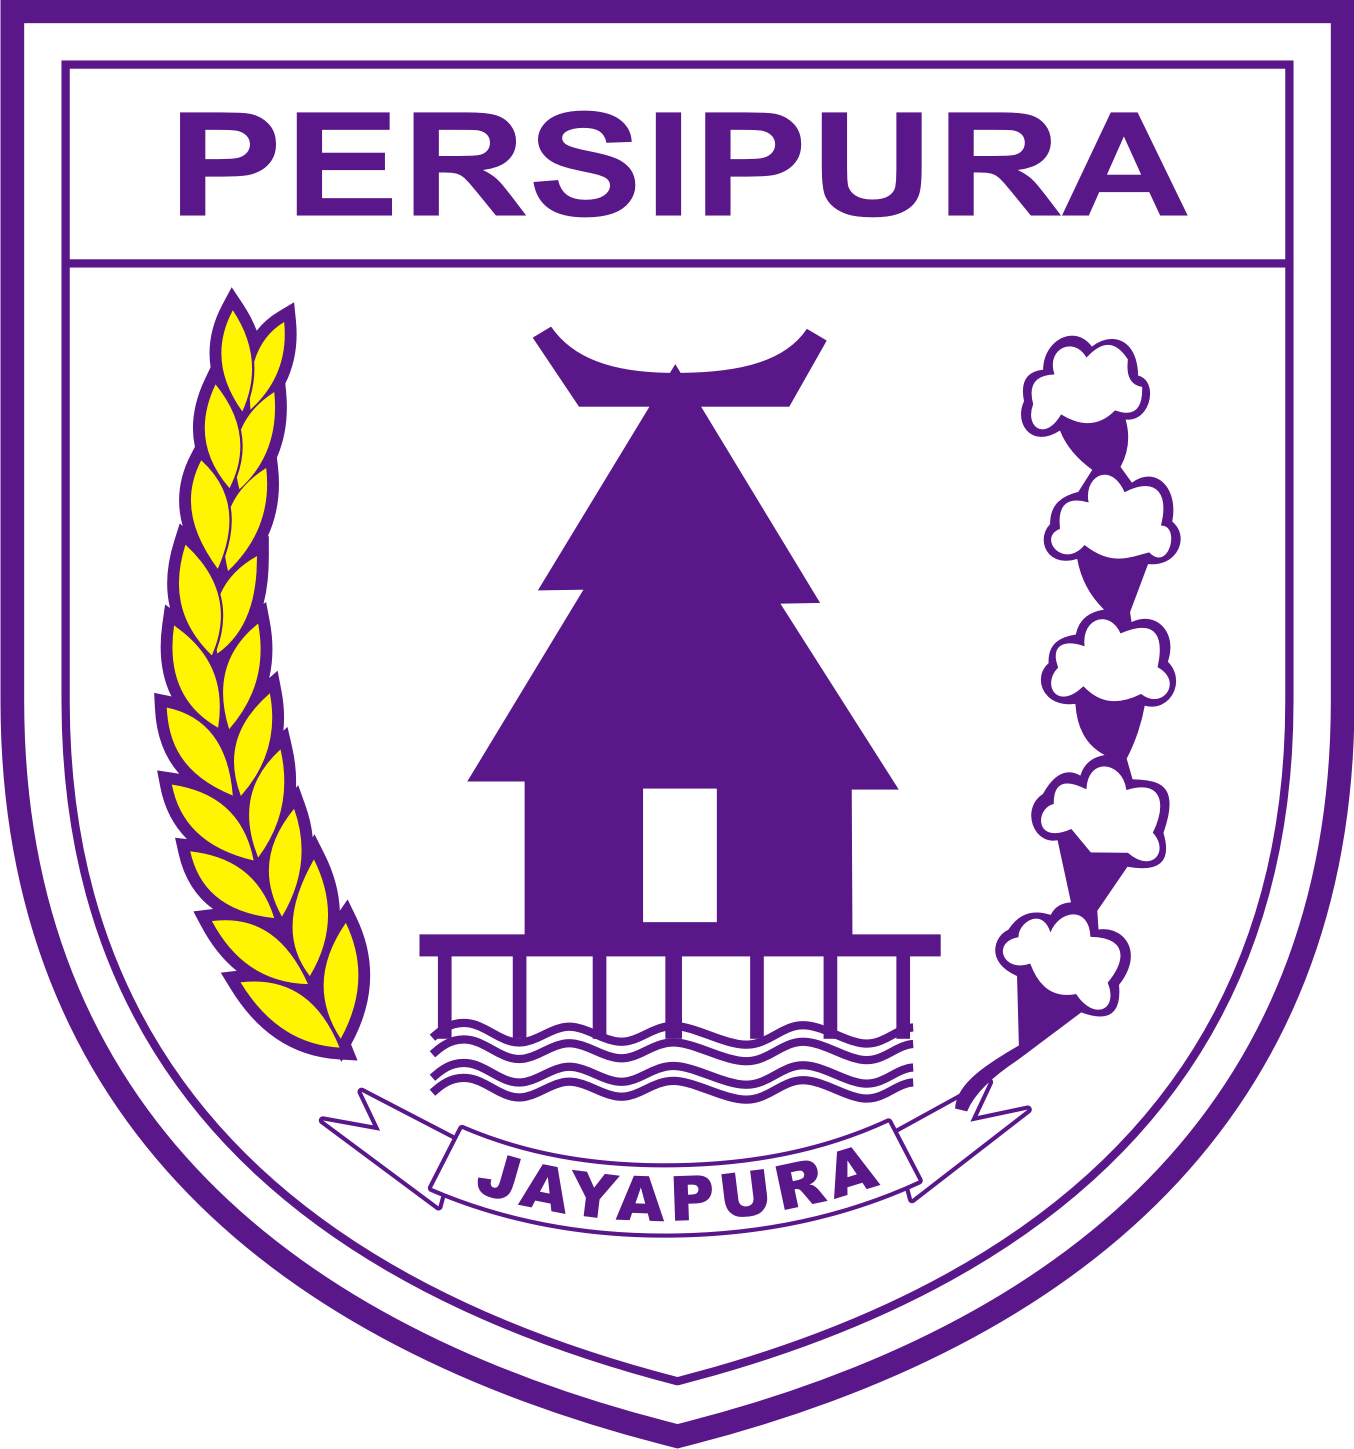 Meme Lucu Unik Logo Persipura vs Madura Utd w@rtasolo.com Gif Lucu